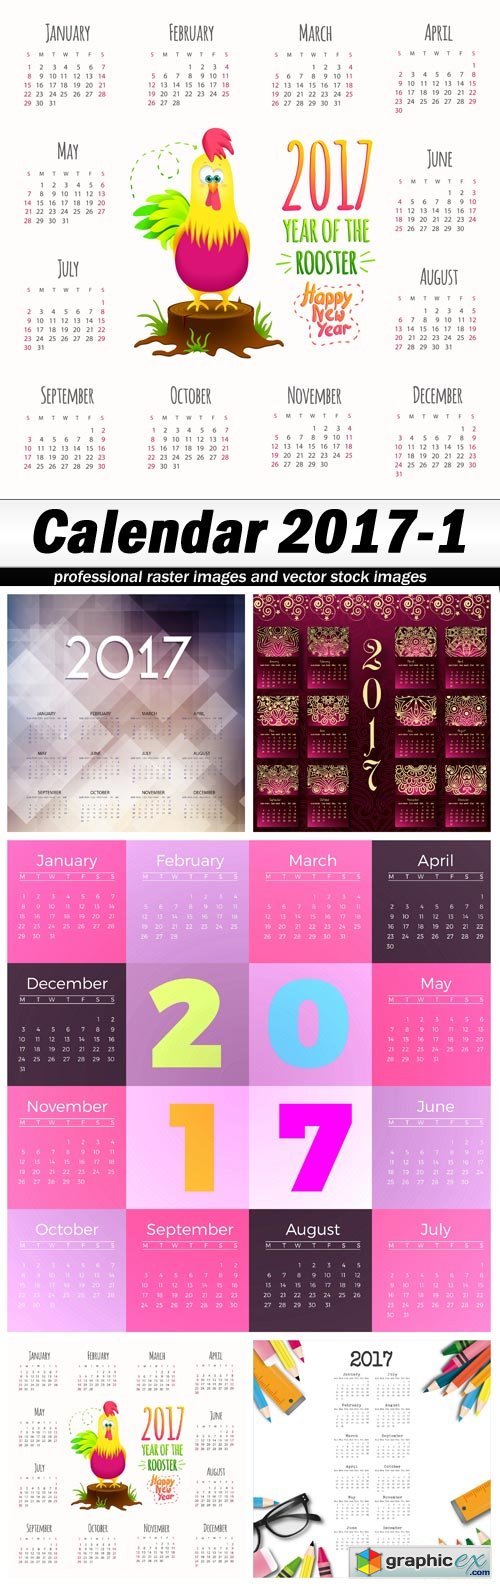 Calendar 2017-1 - 5 EPS